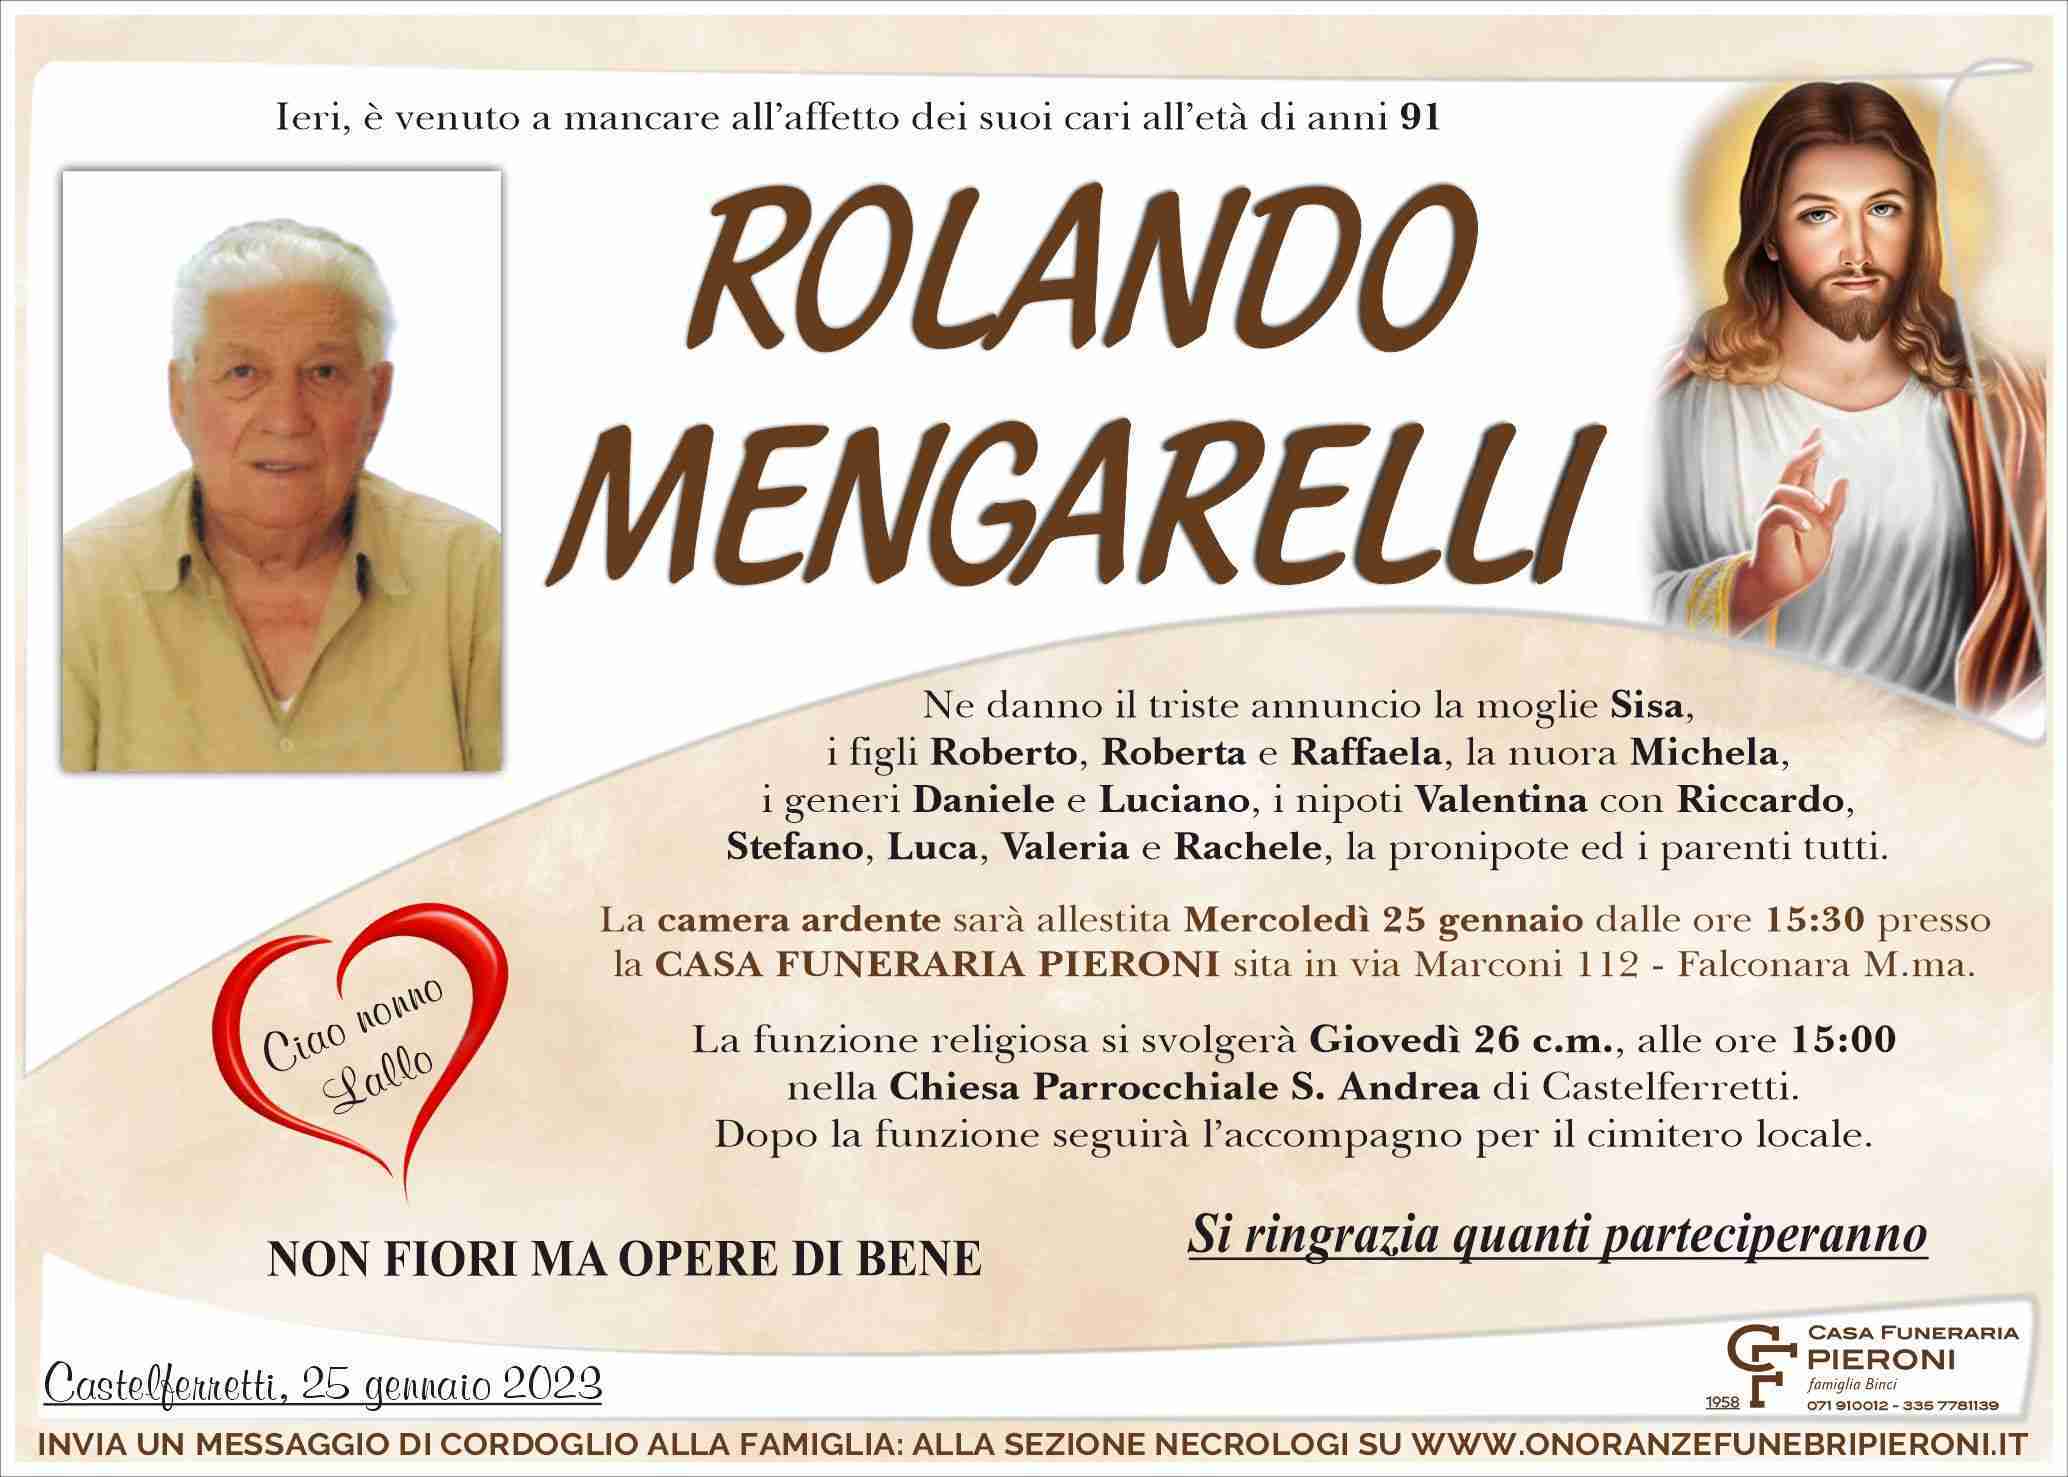 Rolando Mengarelli